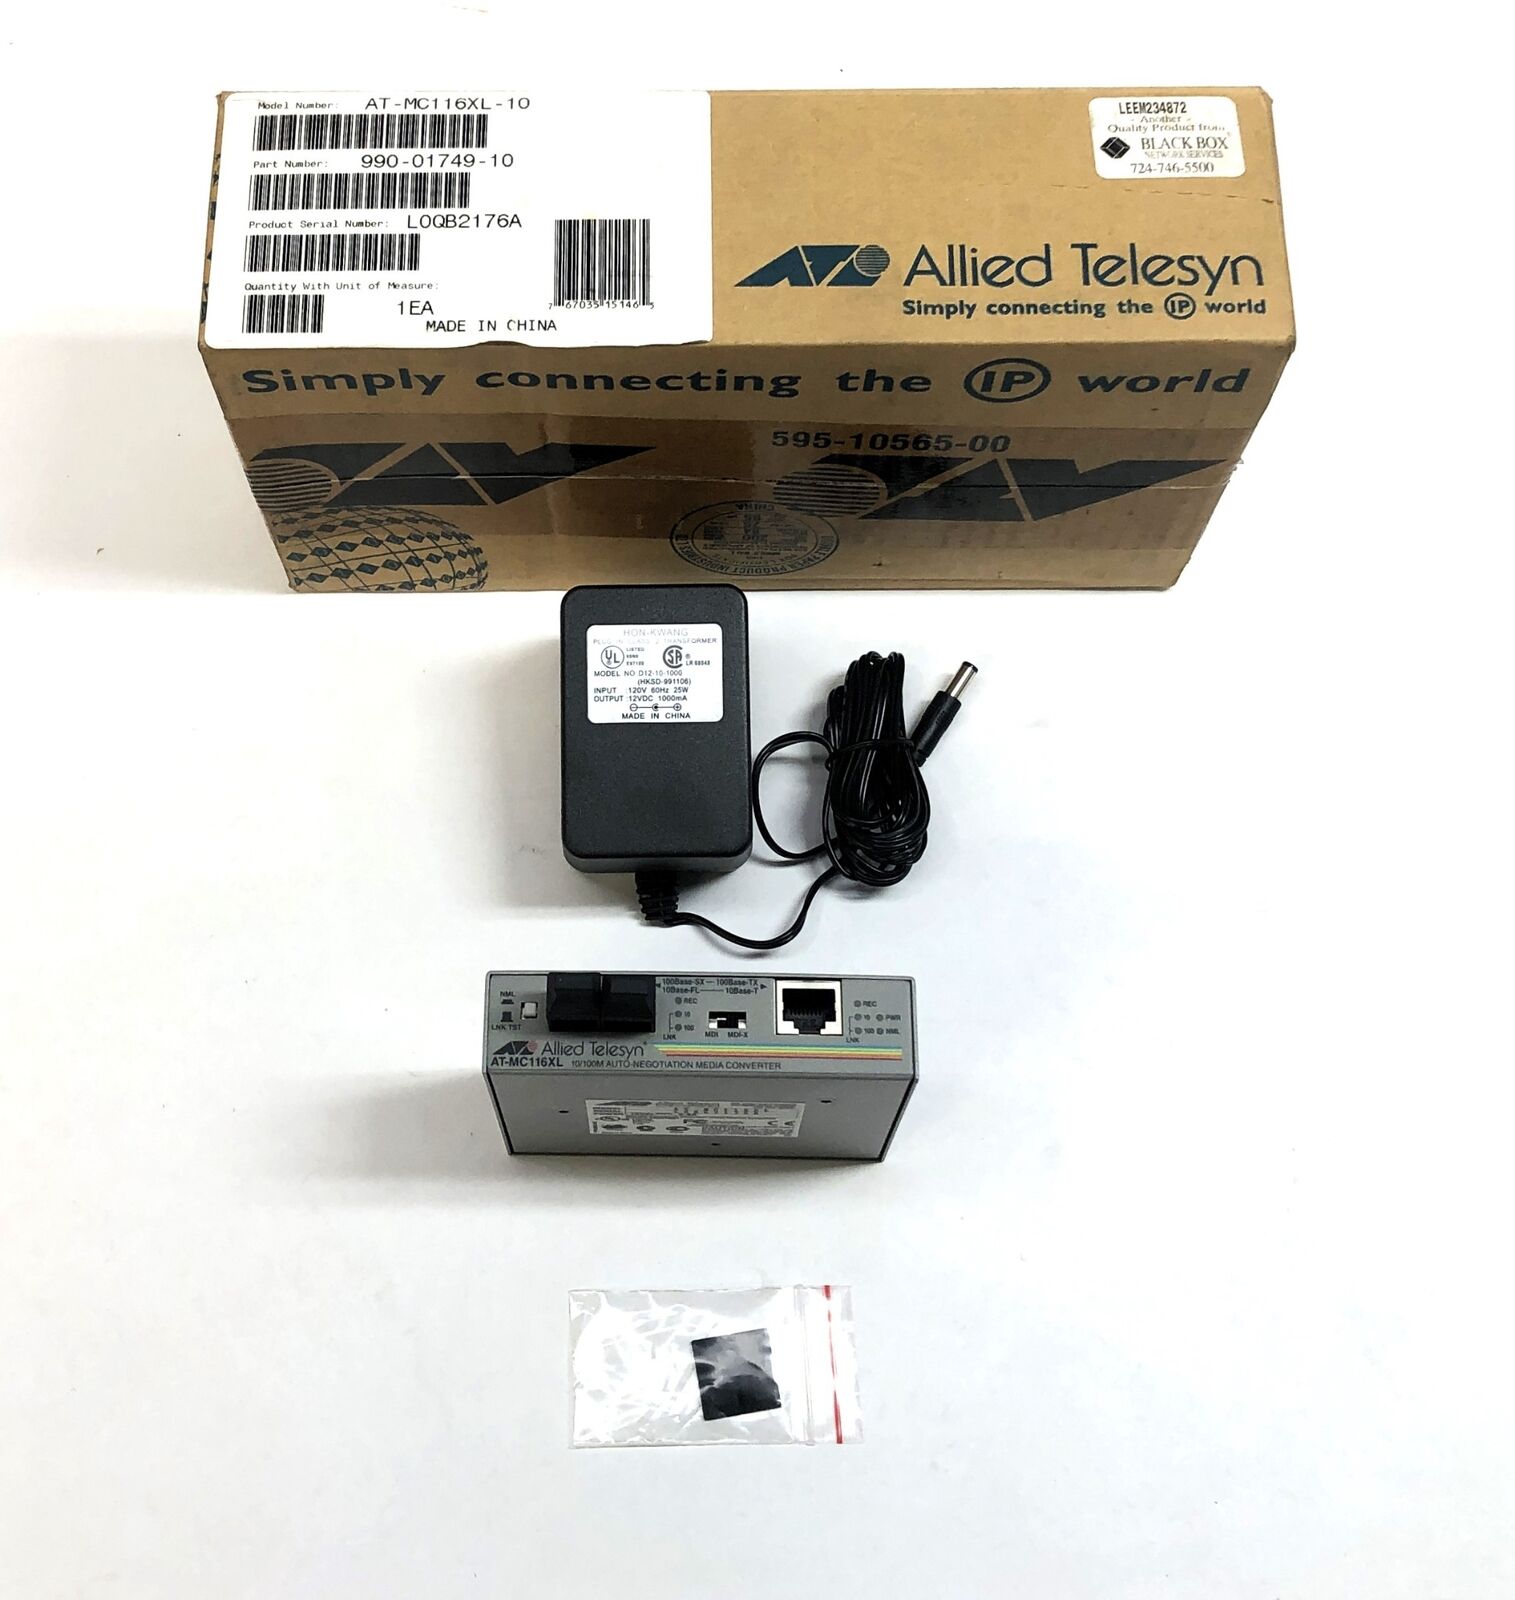 Allied Telesyn Auto-Negotiation Media Converter AT-MC116XL (990-01749-10) NOS